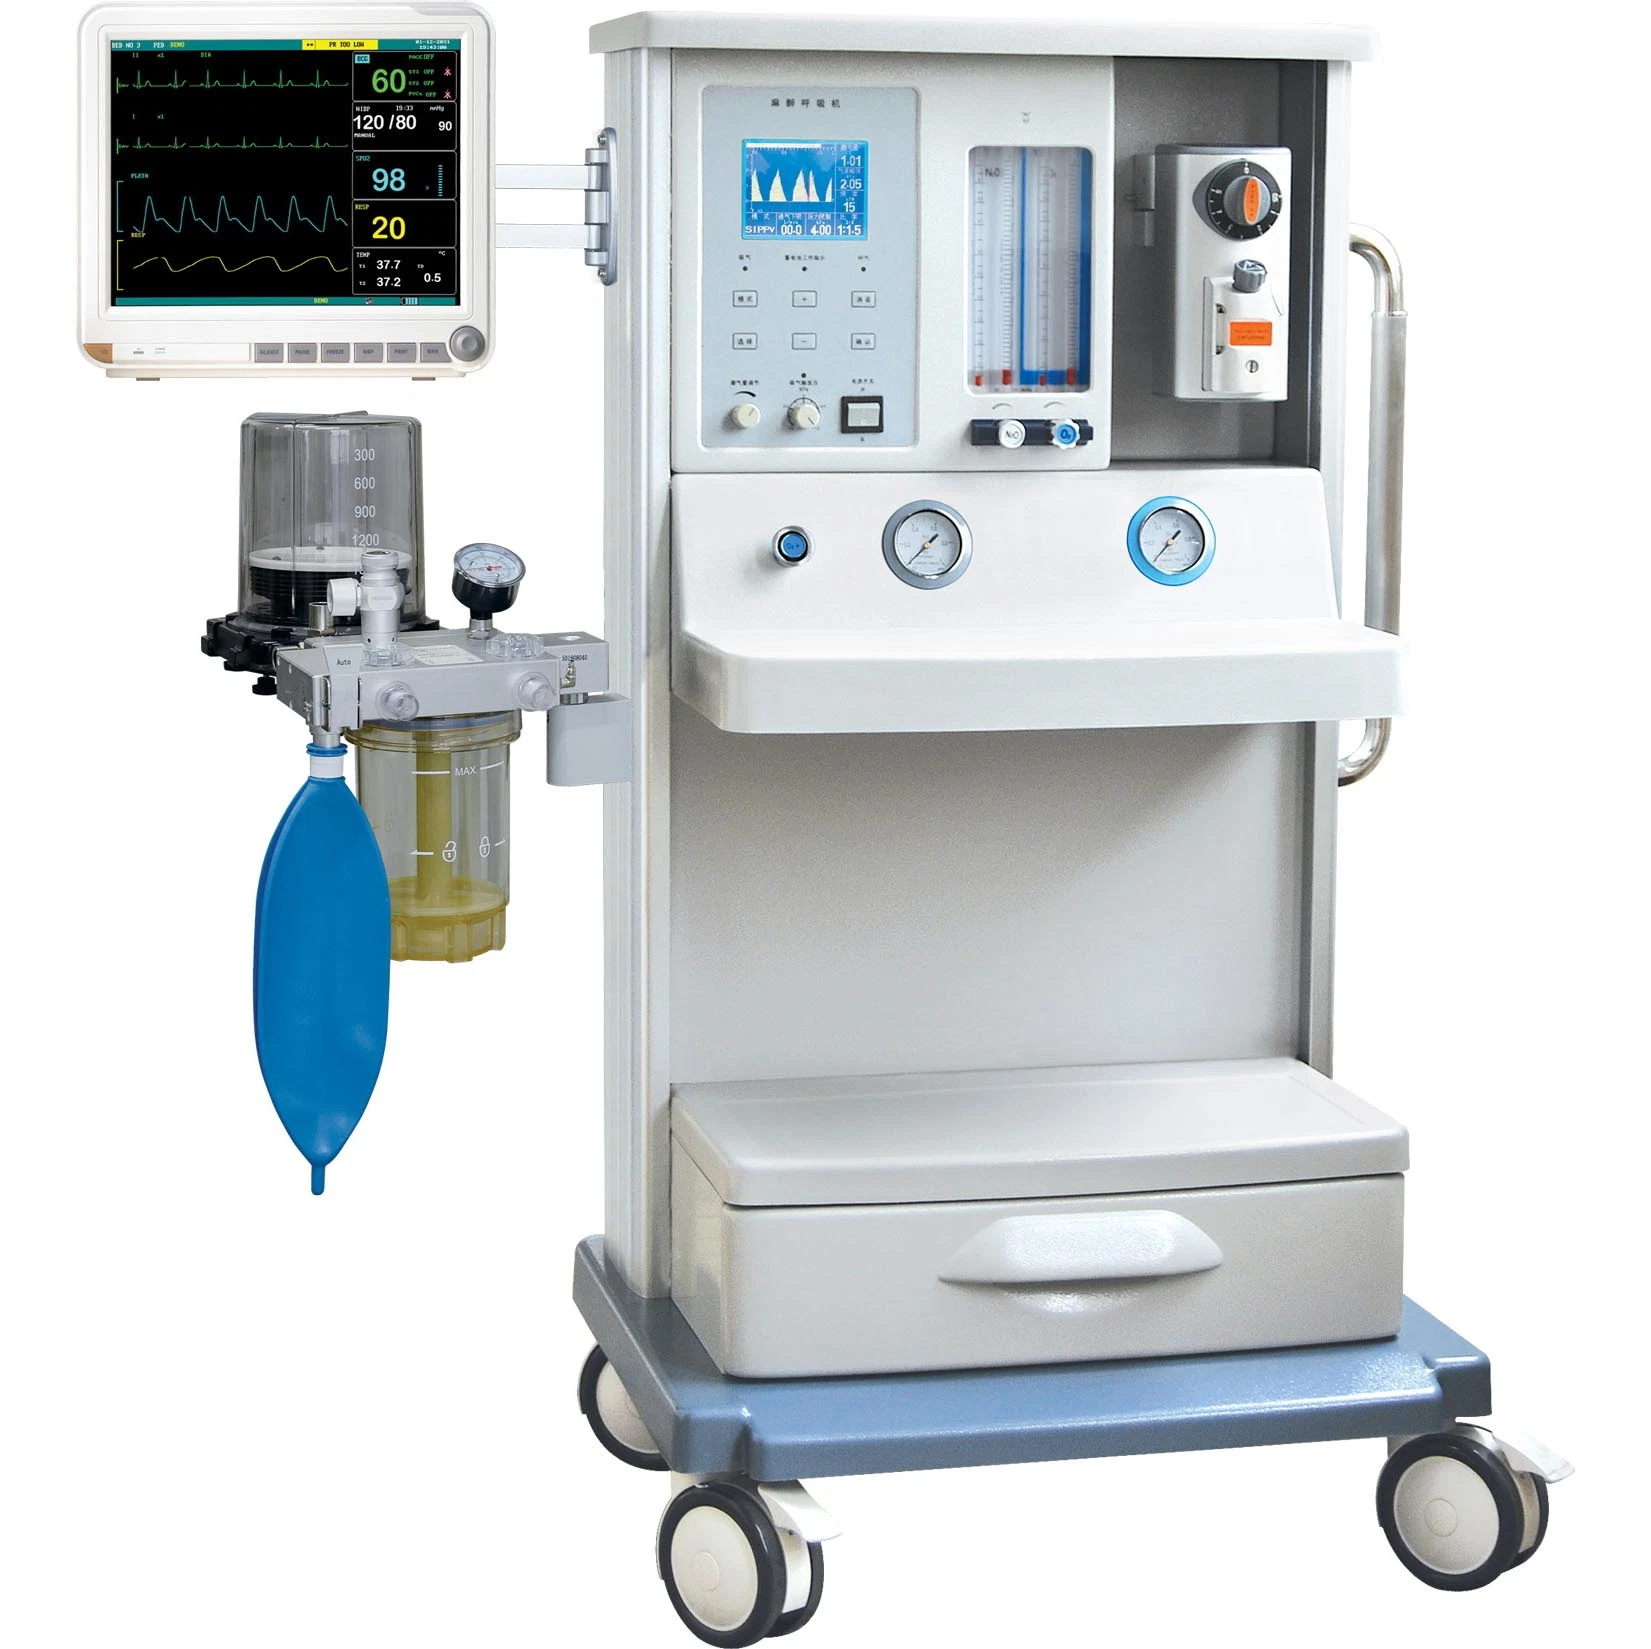 Puao Medical Equipment Manufacture ICU Hospital Jinling 01b Surgical Medical Anesthesia Machine